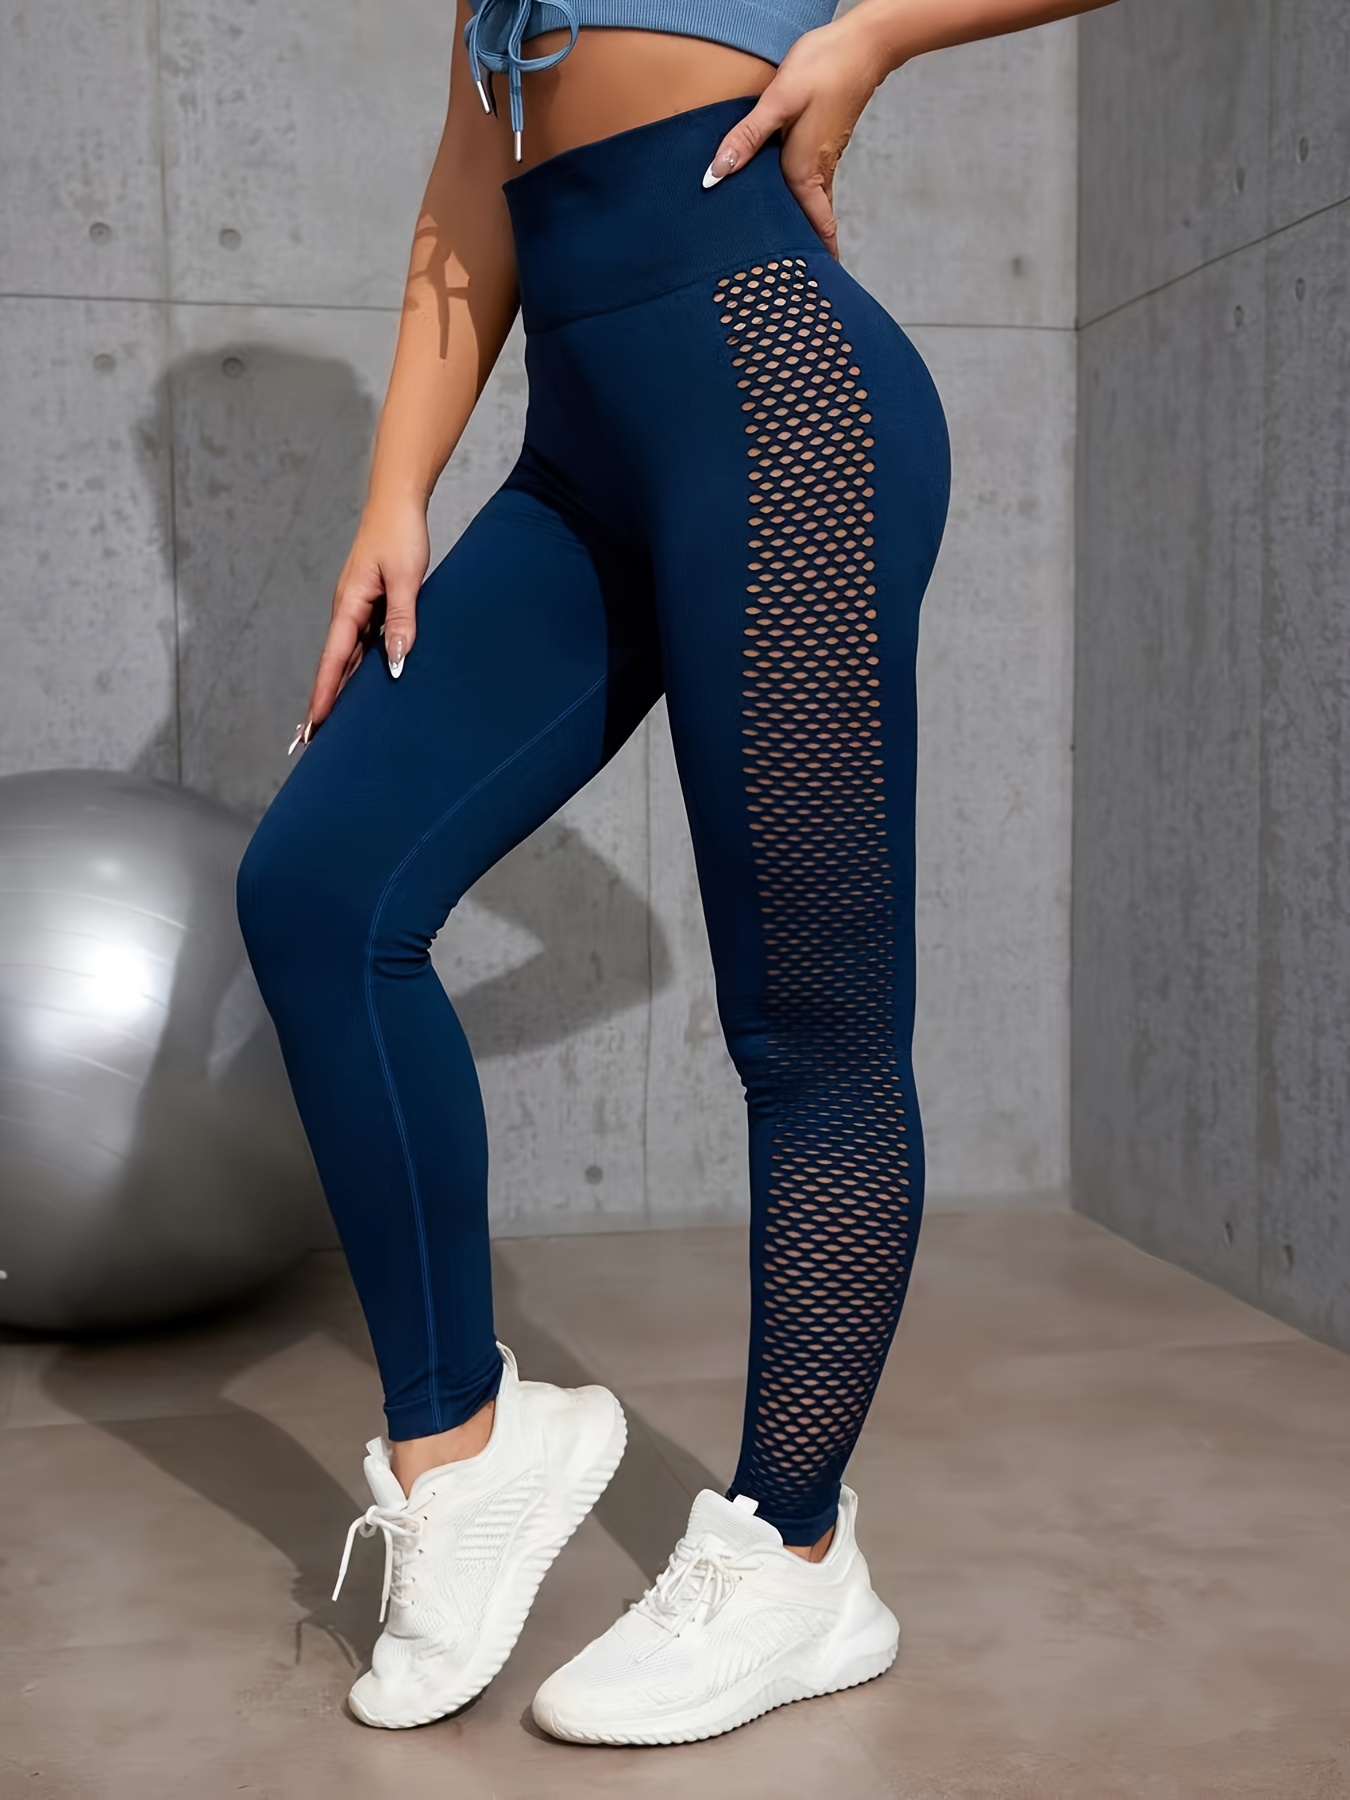 MSemis Women's Shiny Metallic Stretchy Leggings High Waist Yoga Leggings  Gym Compression Pants